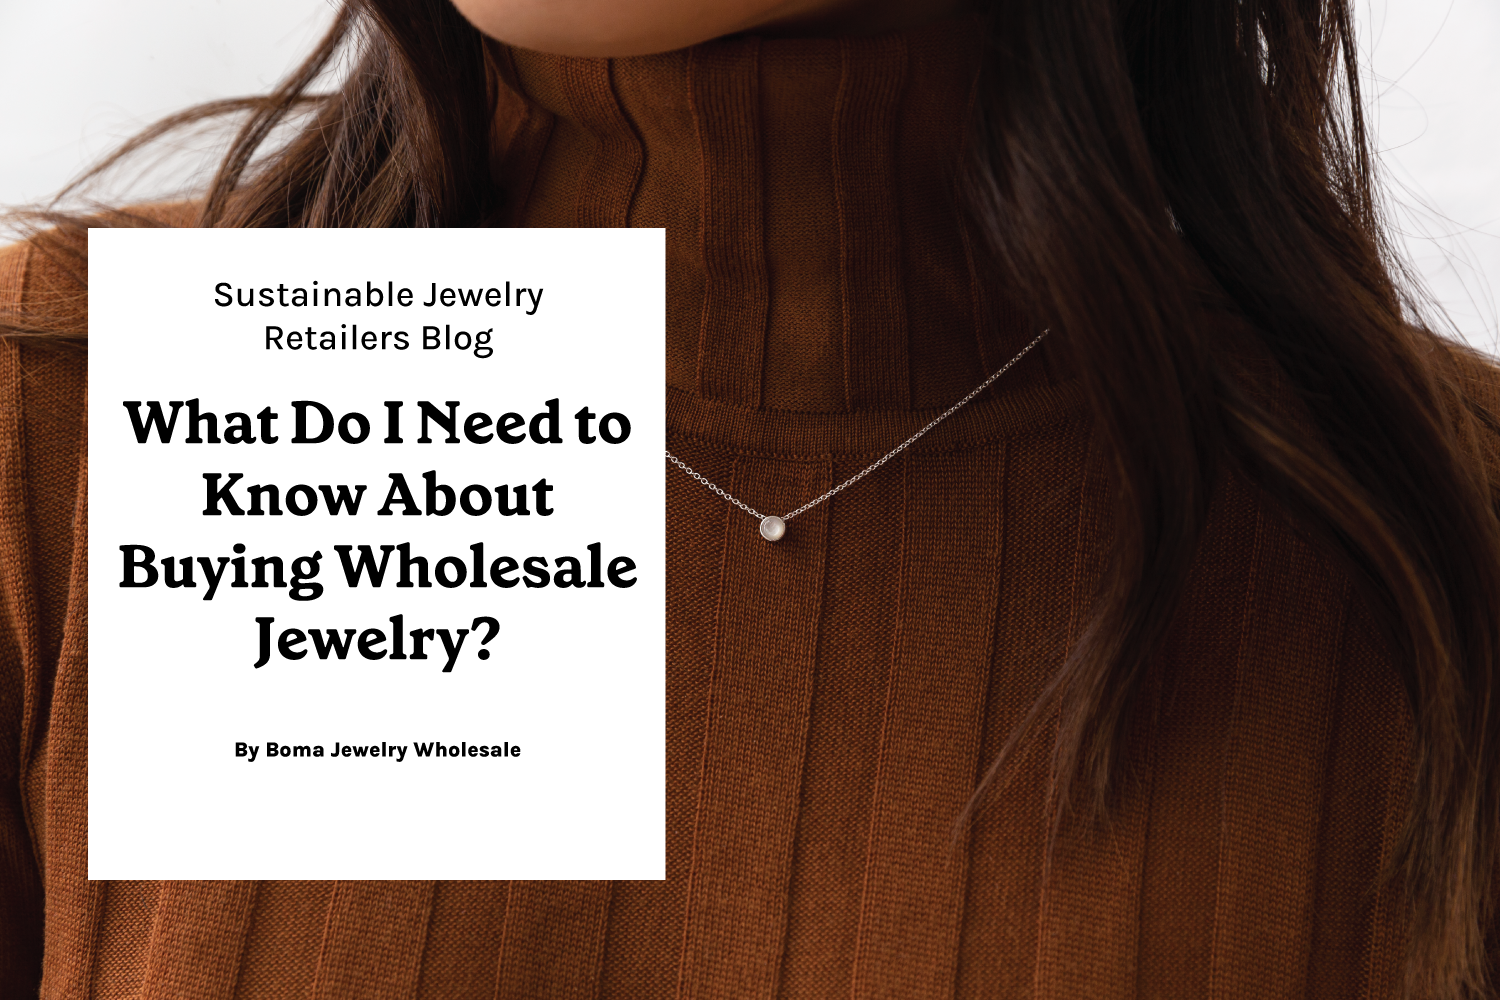 Boma Jewelry Wholesale Blog